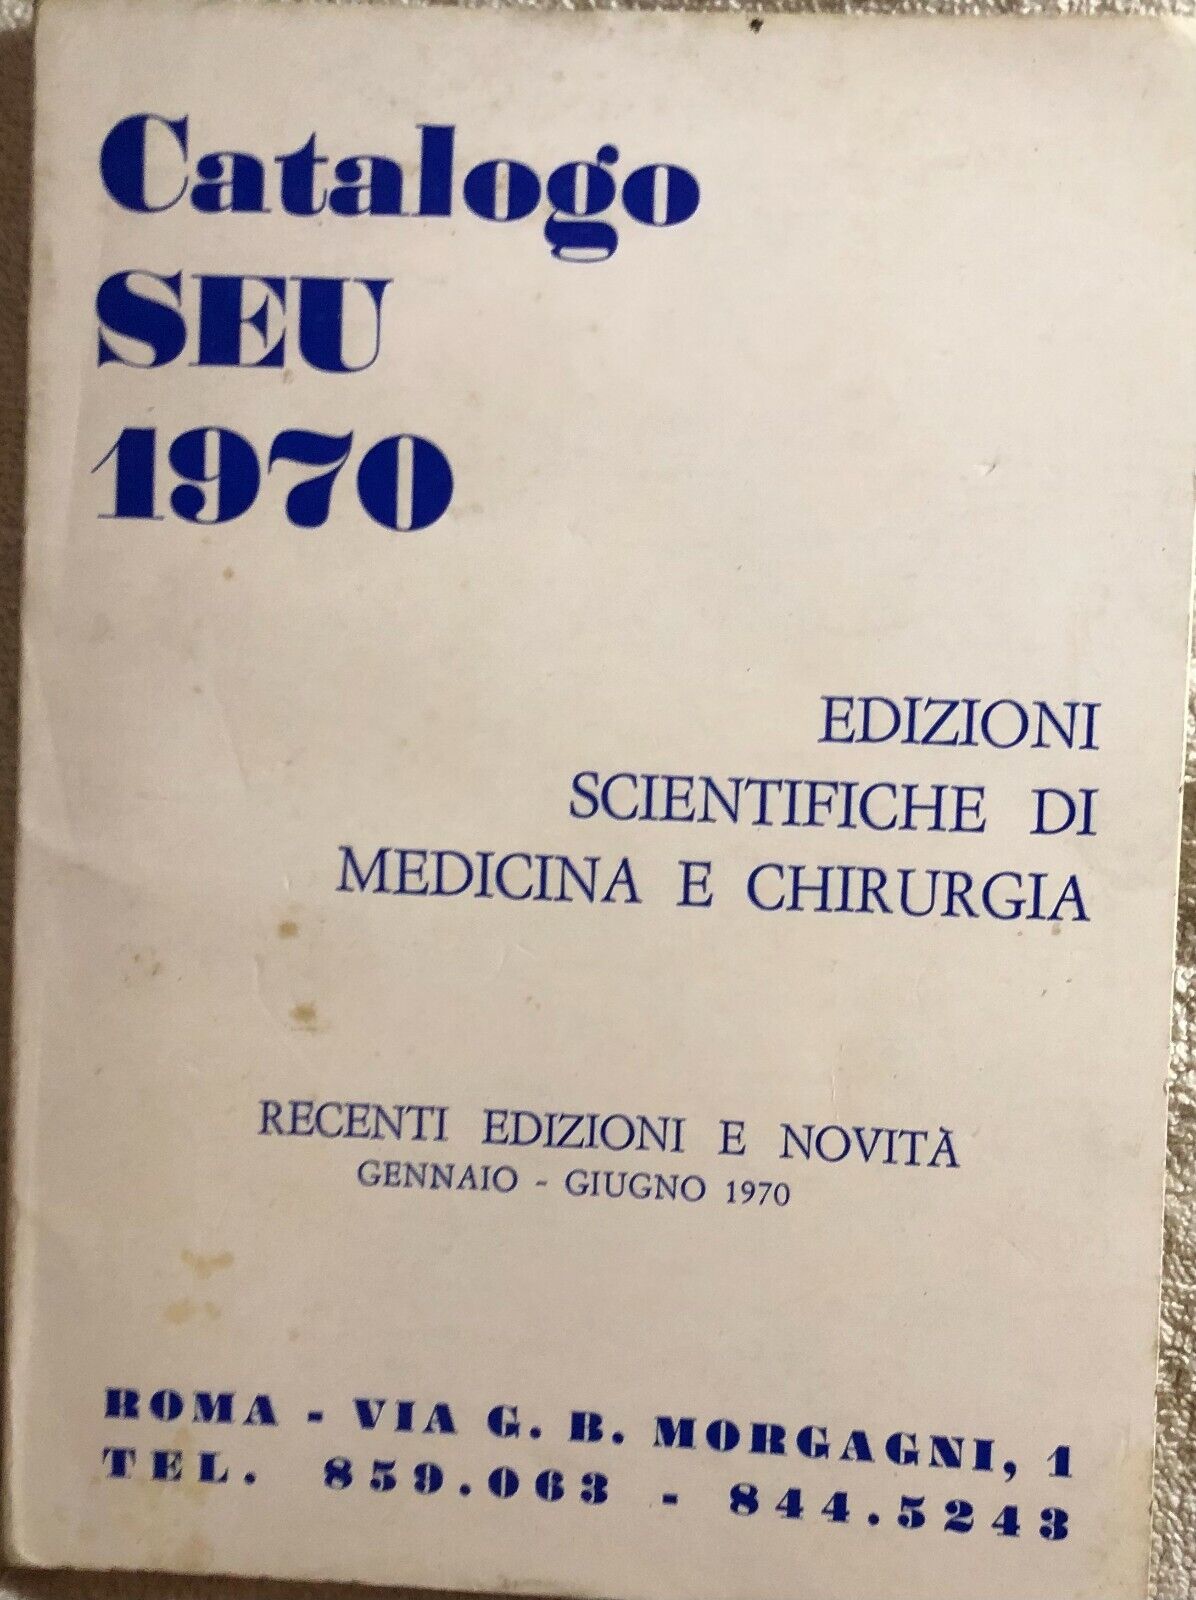 Catalogo SEU 1970 di Aa.vv.,  1970,  Societ? Editrice Universo